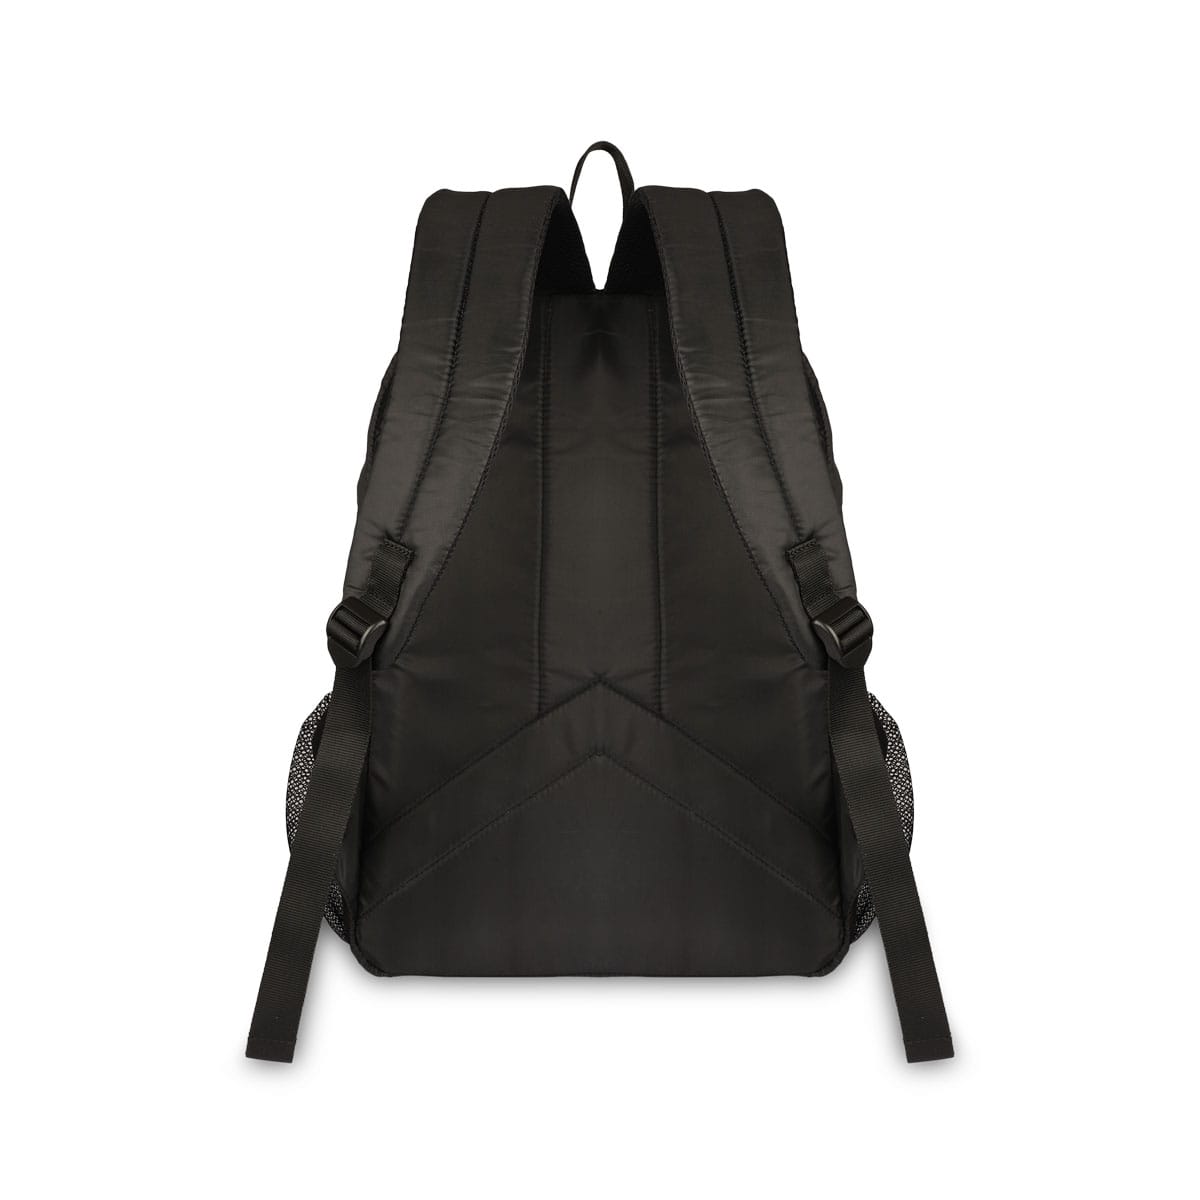 Black | Protecta Triumph Laptop Backpack-3